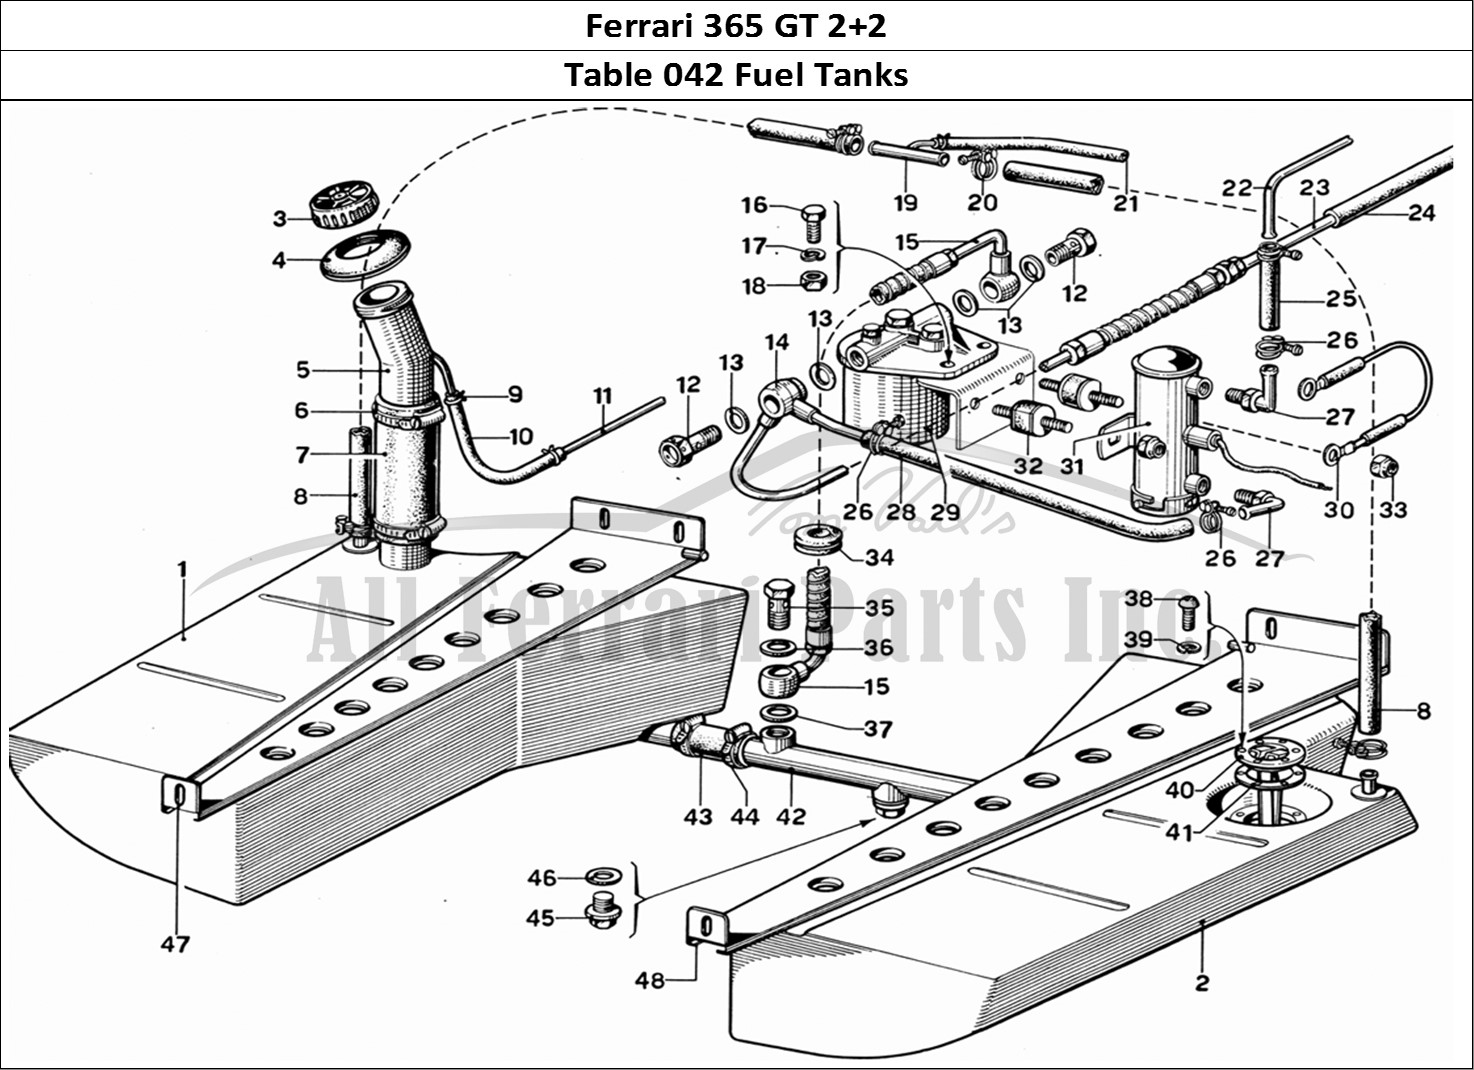 Ferrari Parts Ferrari 365 GT 2+2 (Mechanical) Page 042 Fueltanks